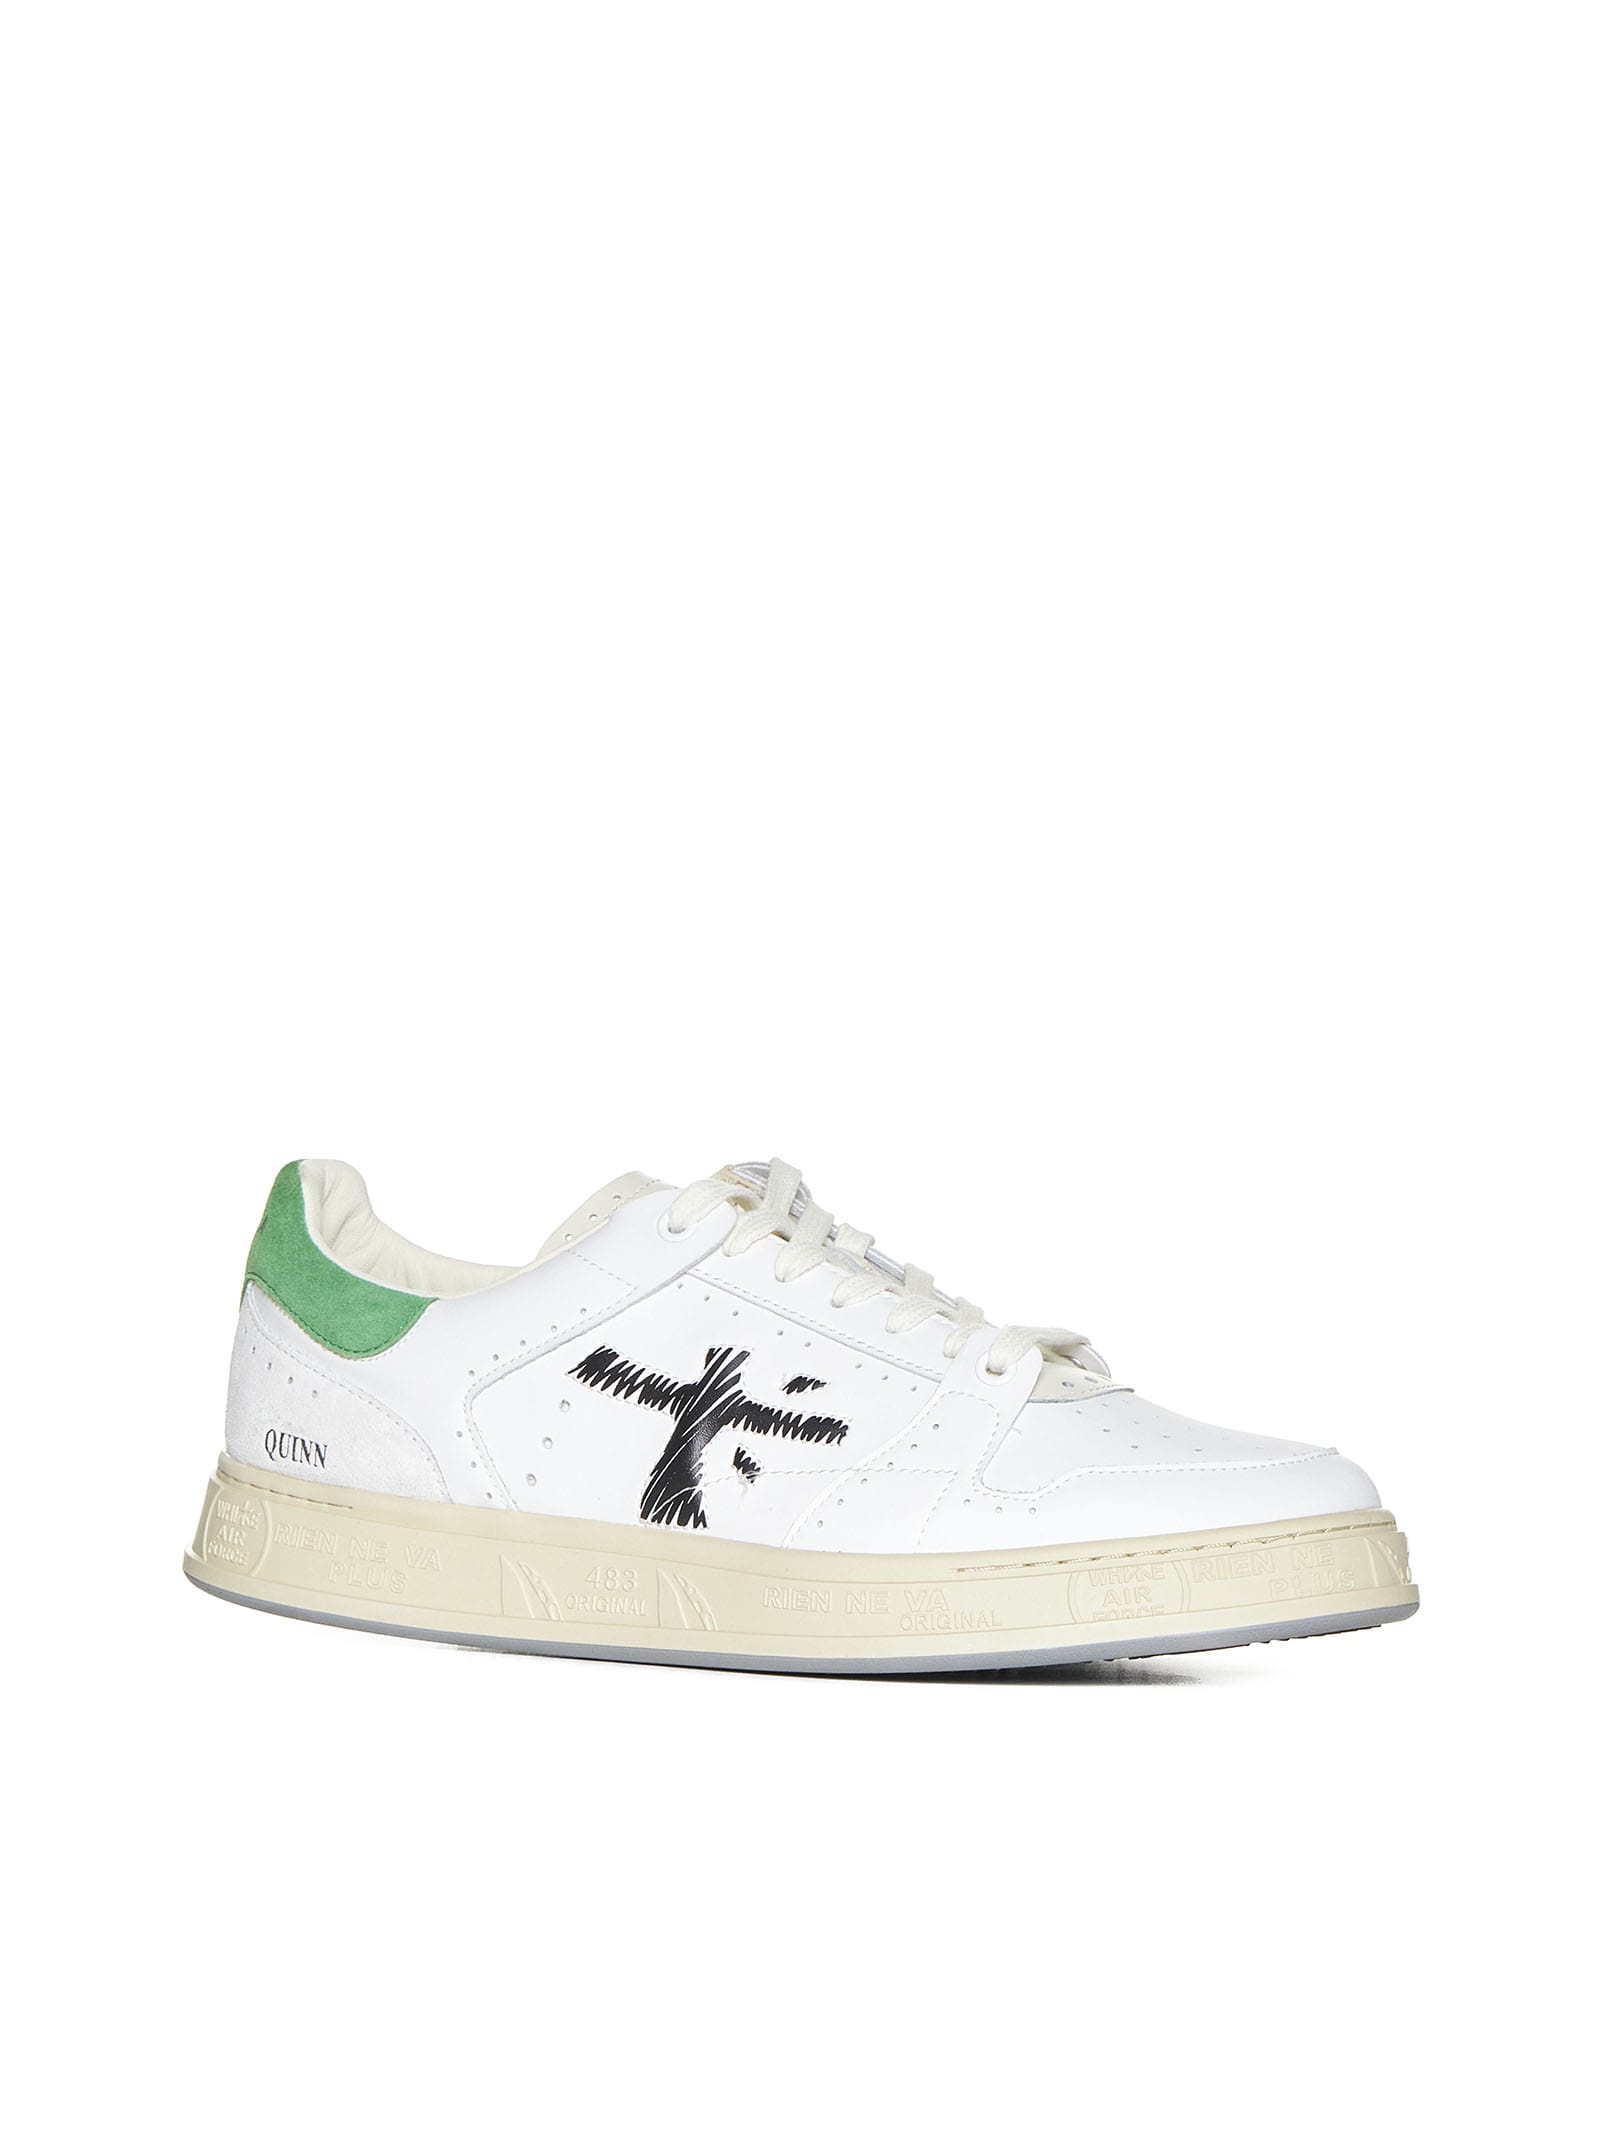 Shop Premiata Sneakers In White/green